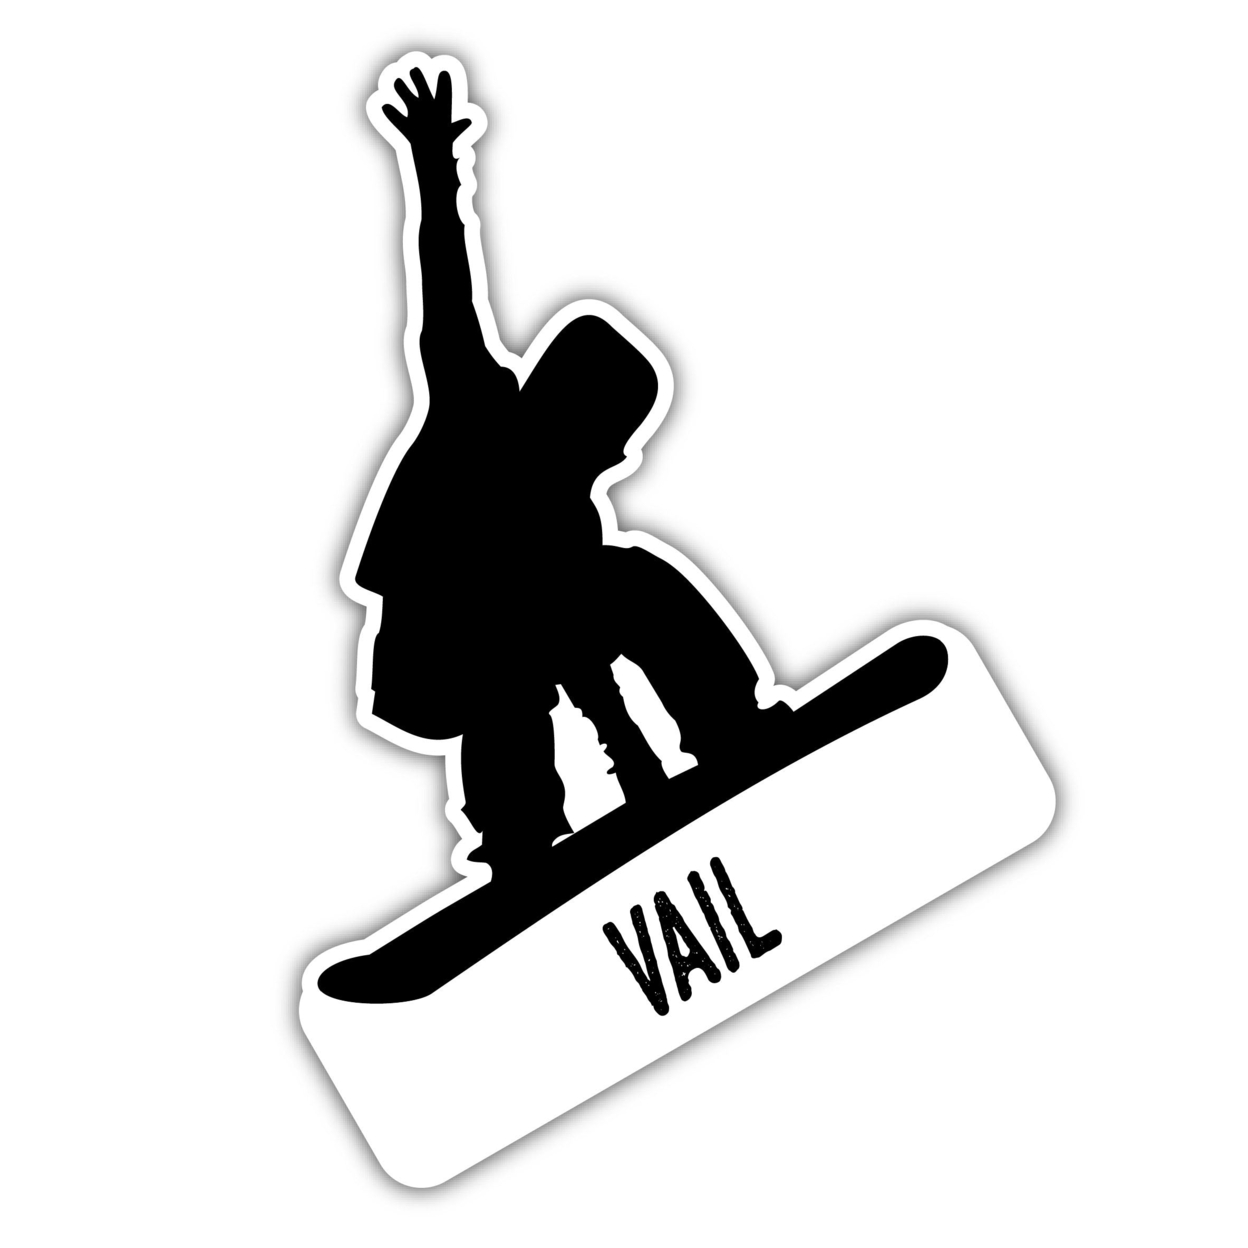 Vail Colorado Ski Adventures Souvenir Approximately 5 X 2.5-Inch Vinyl Decal Sticker Goggle Design